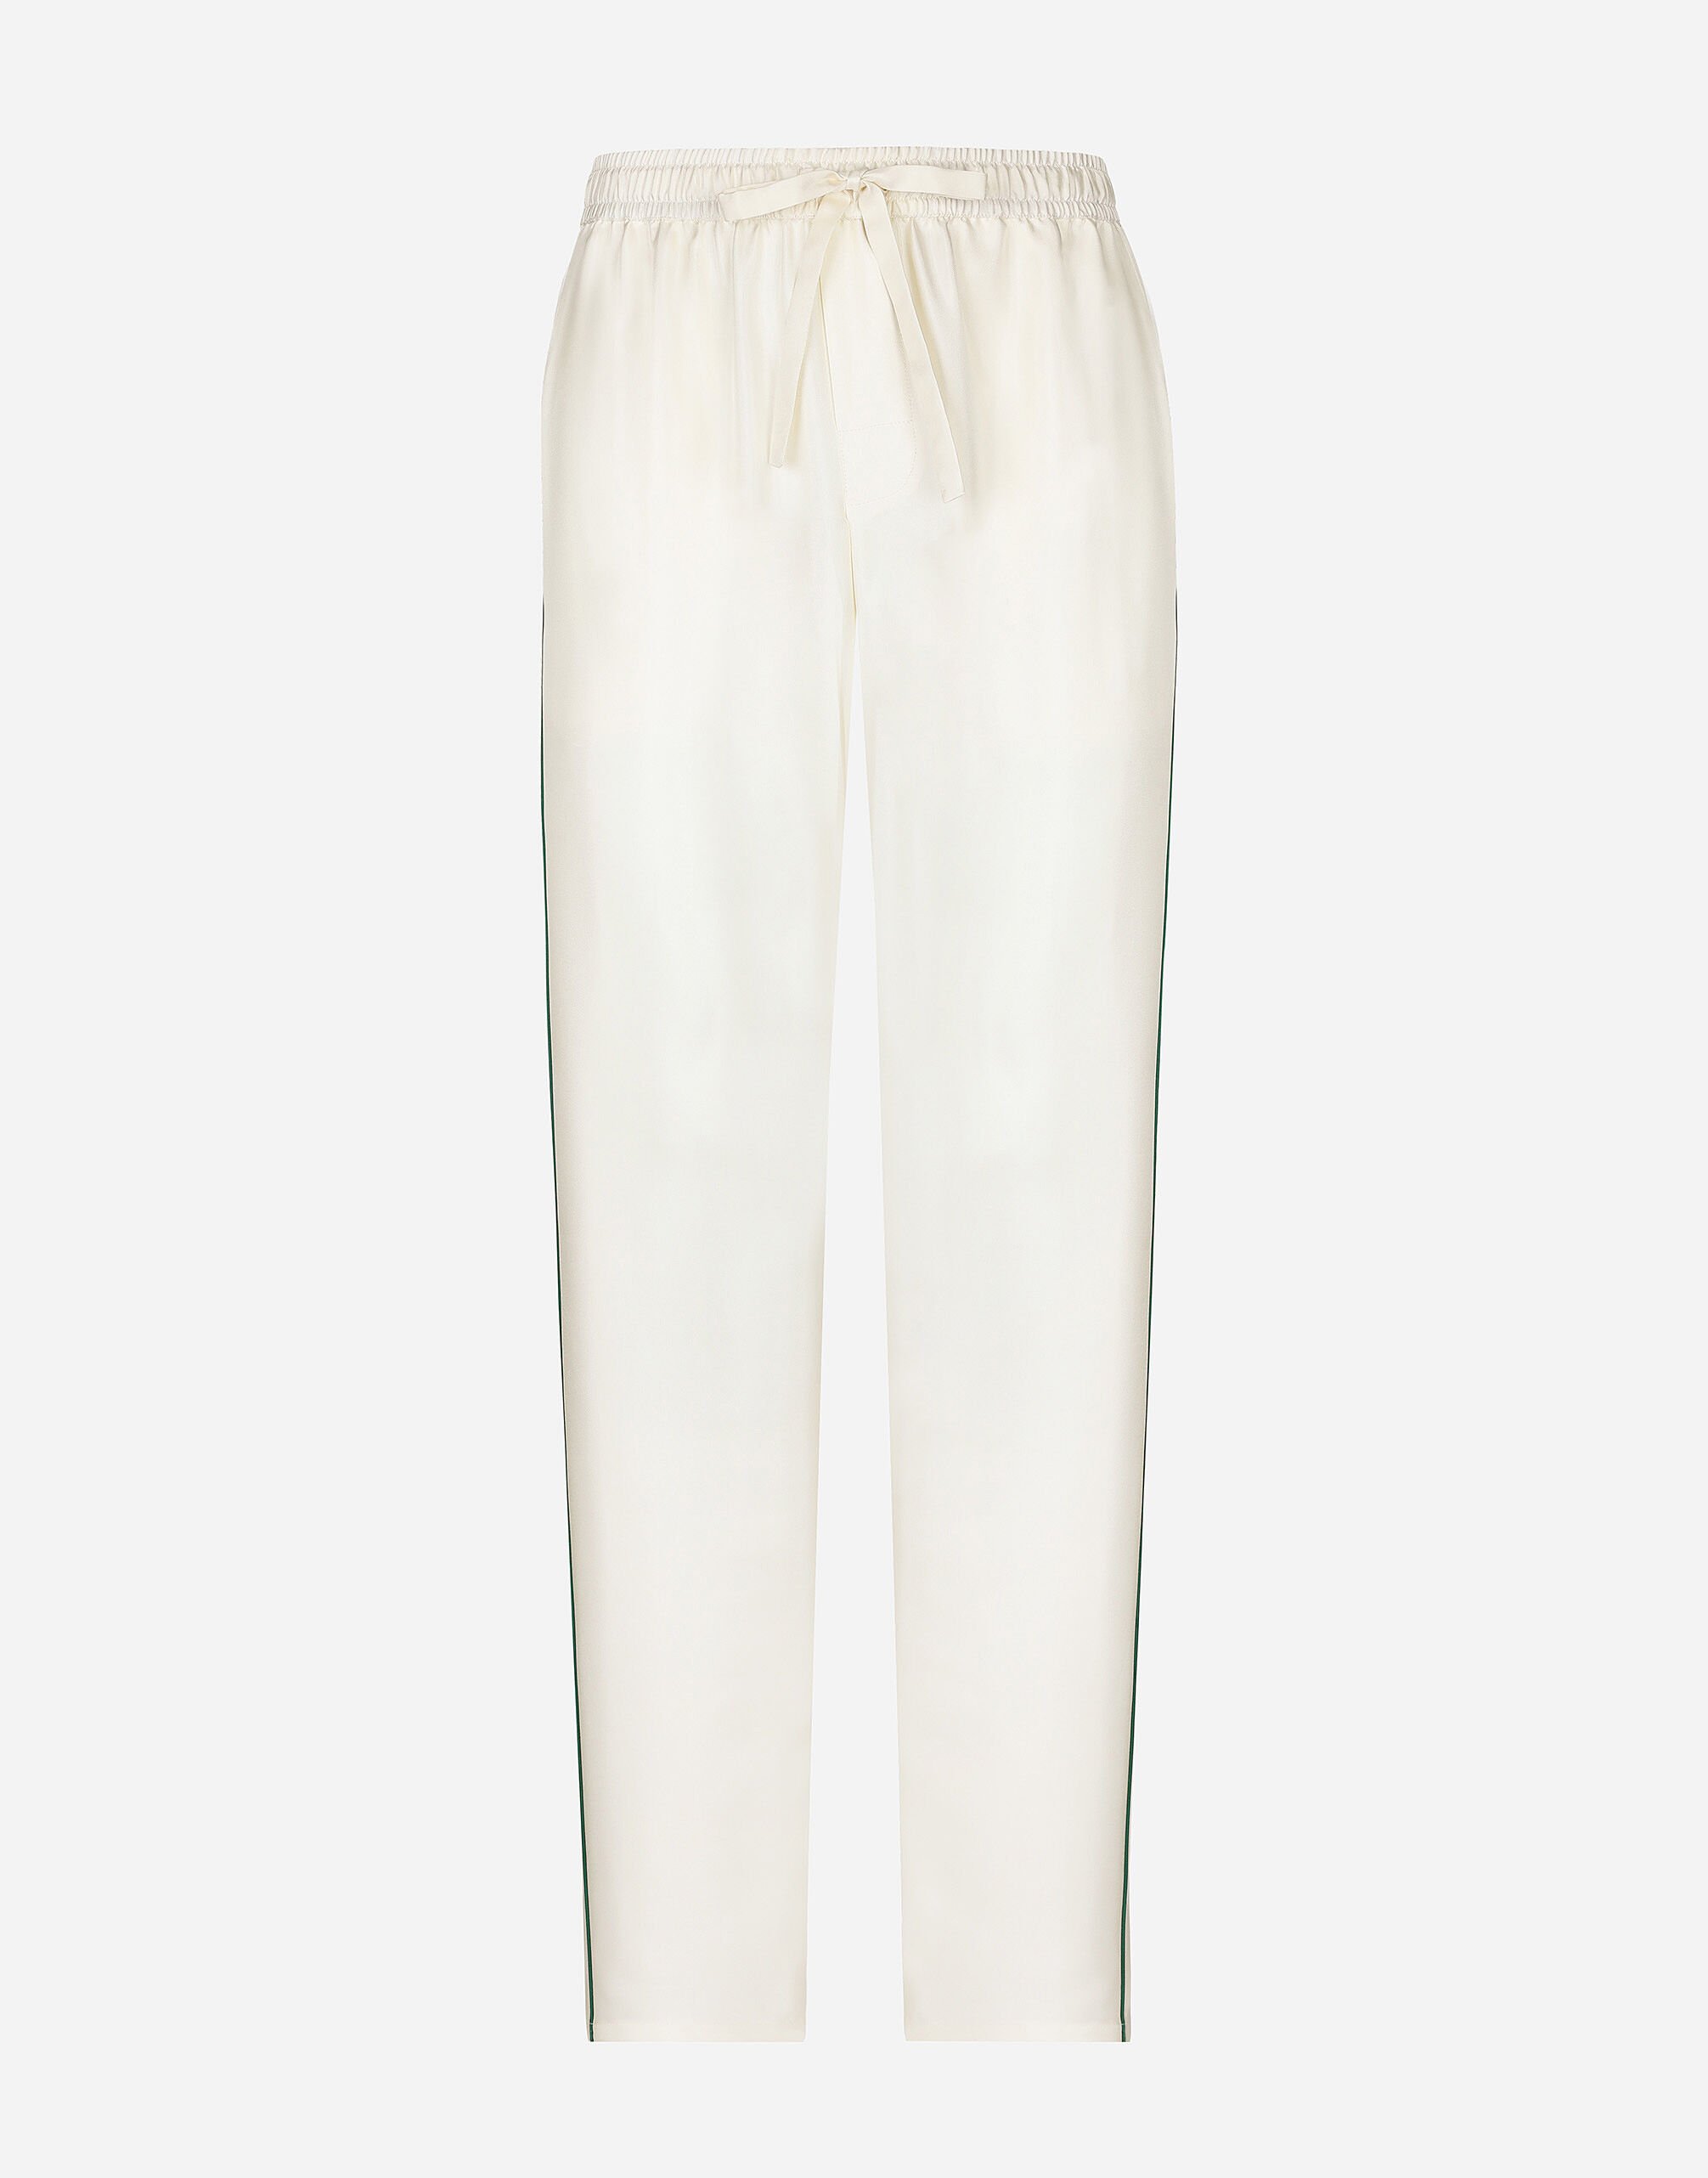 Dolce & Gabbana Silk jogging pants with DG embroidery Print GVRMATHI1SV